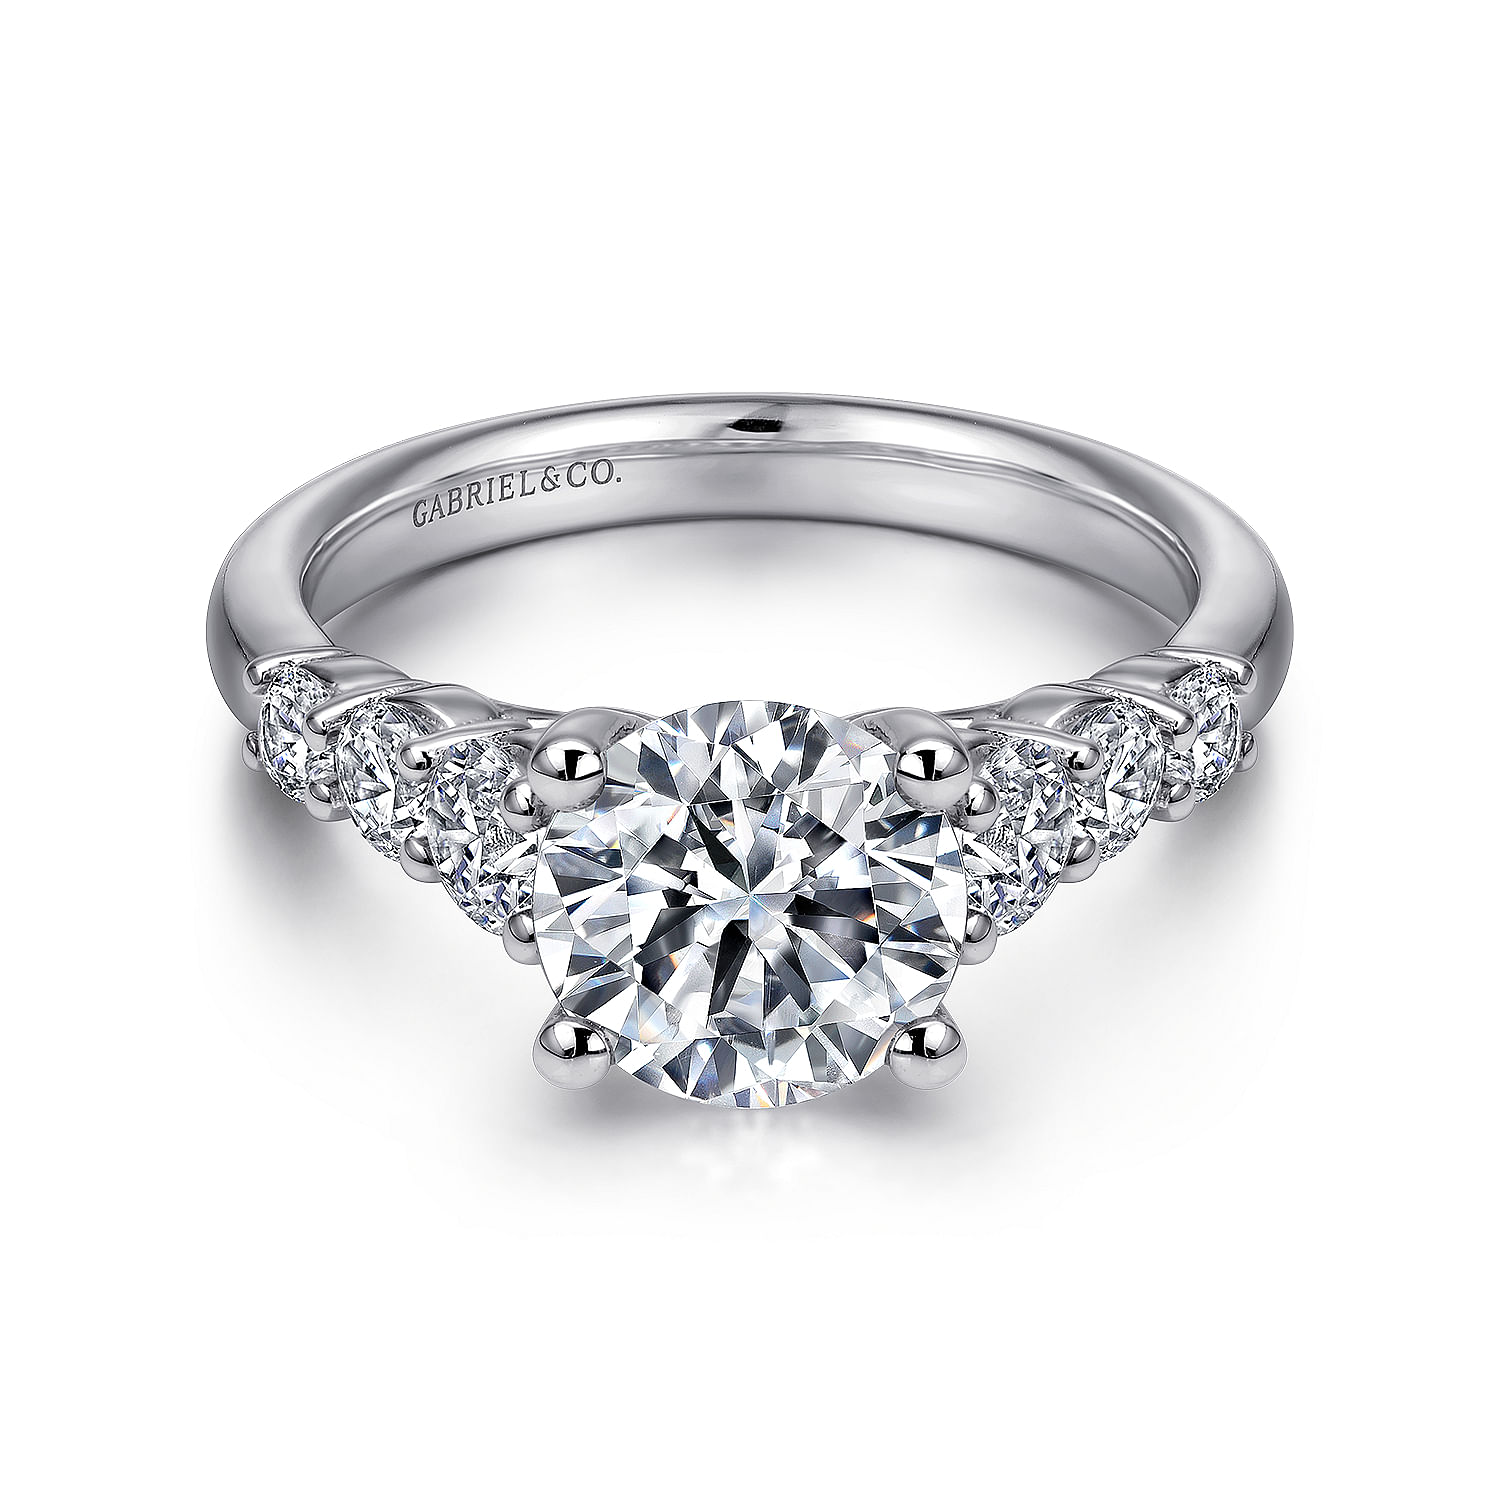 Darby - 14K White Gold Round Diamond Engagement Ring